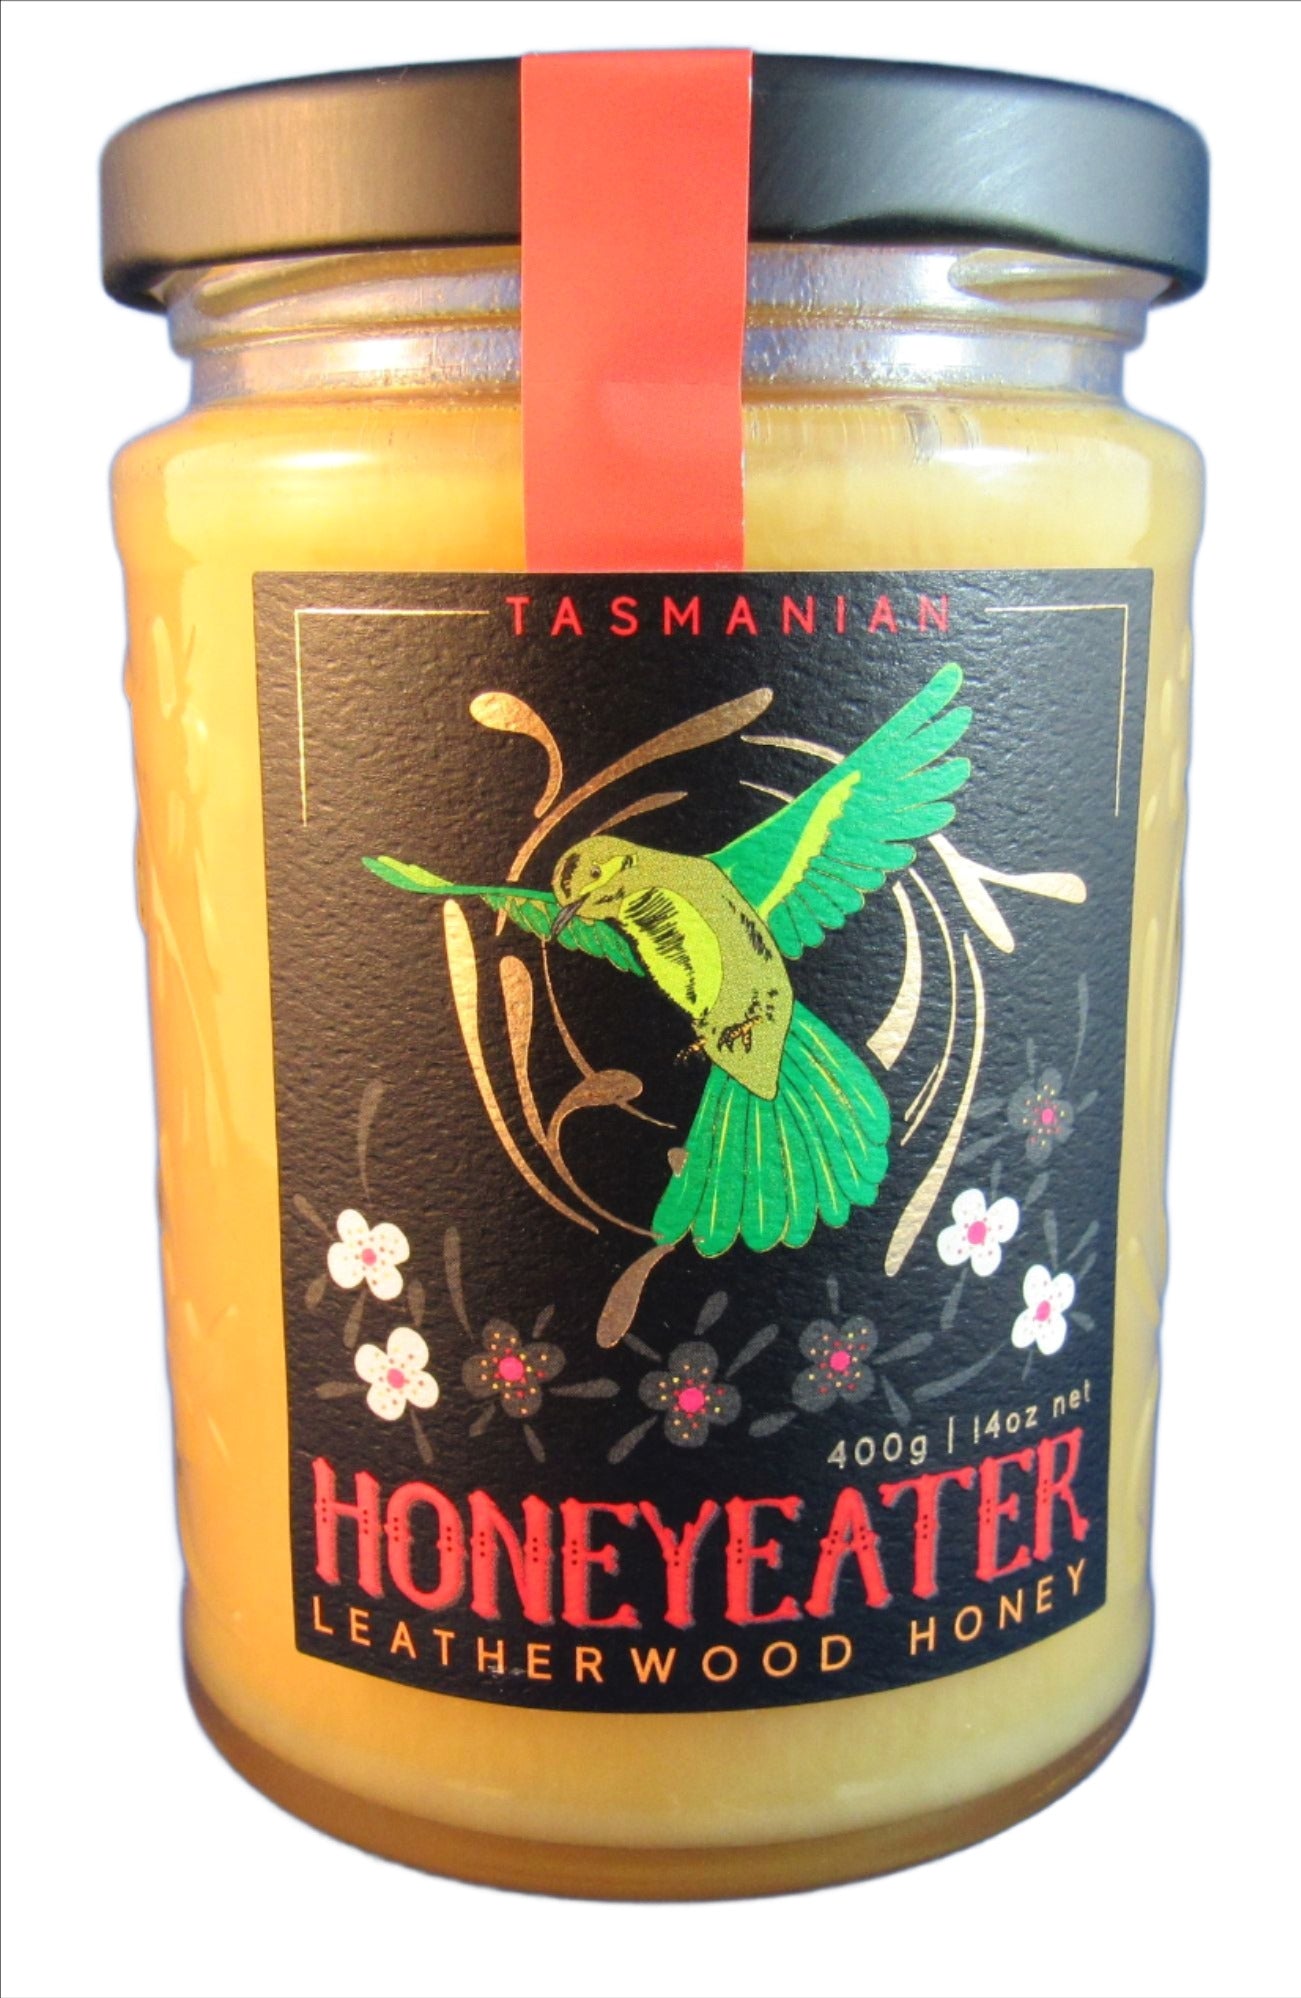 'Honeyeater' Leatherwood honey (Tasmanian Honey Company) 400gms jar